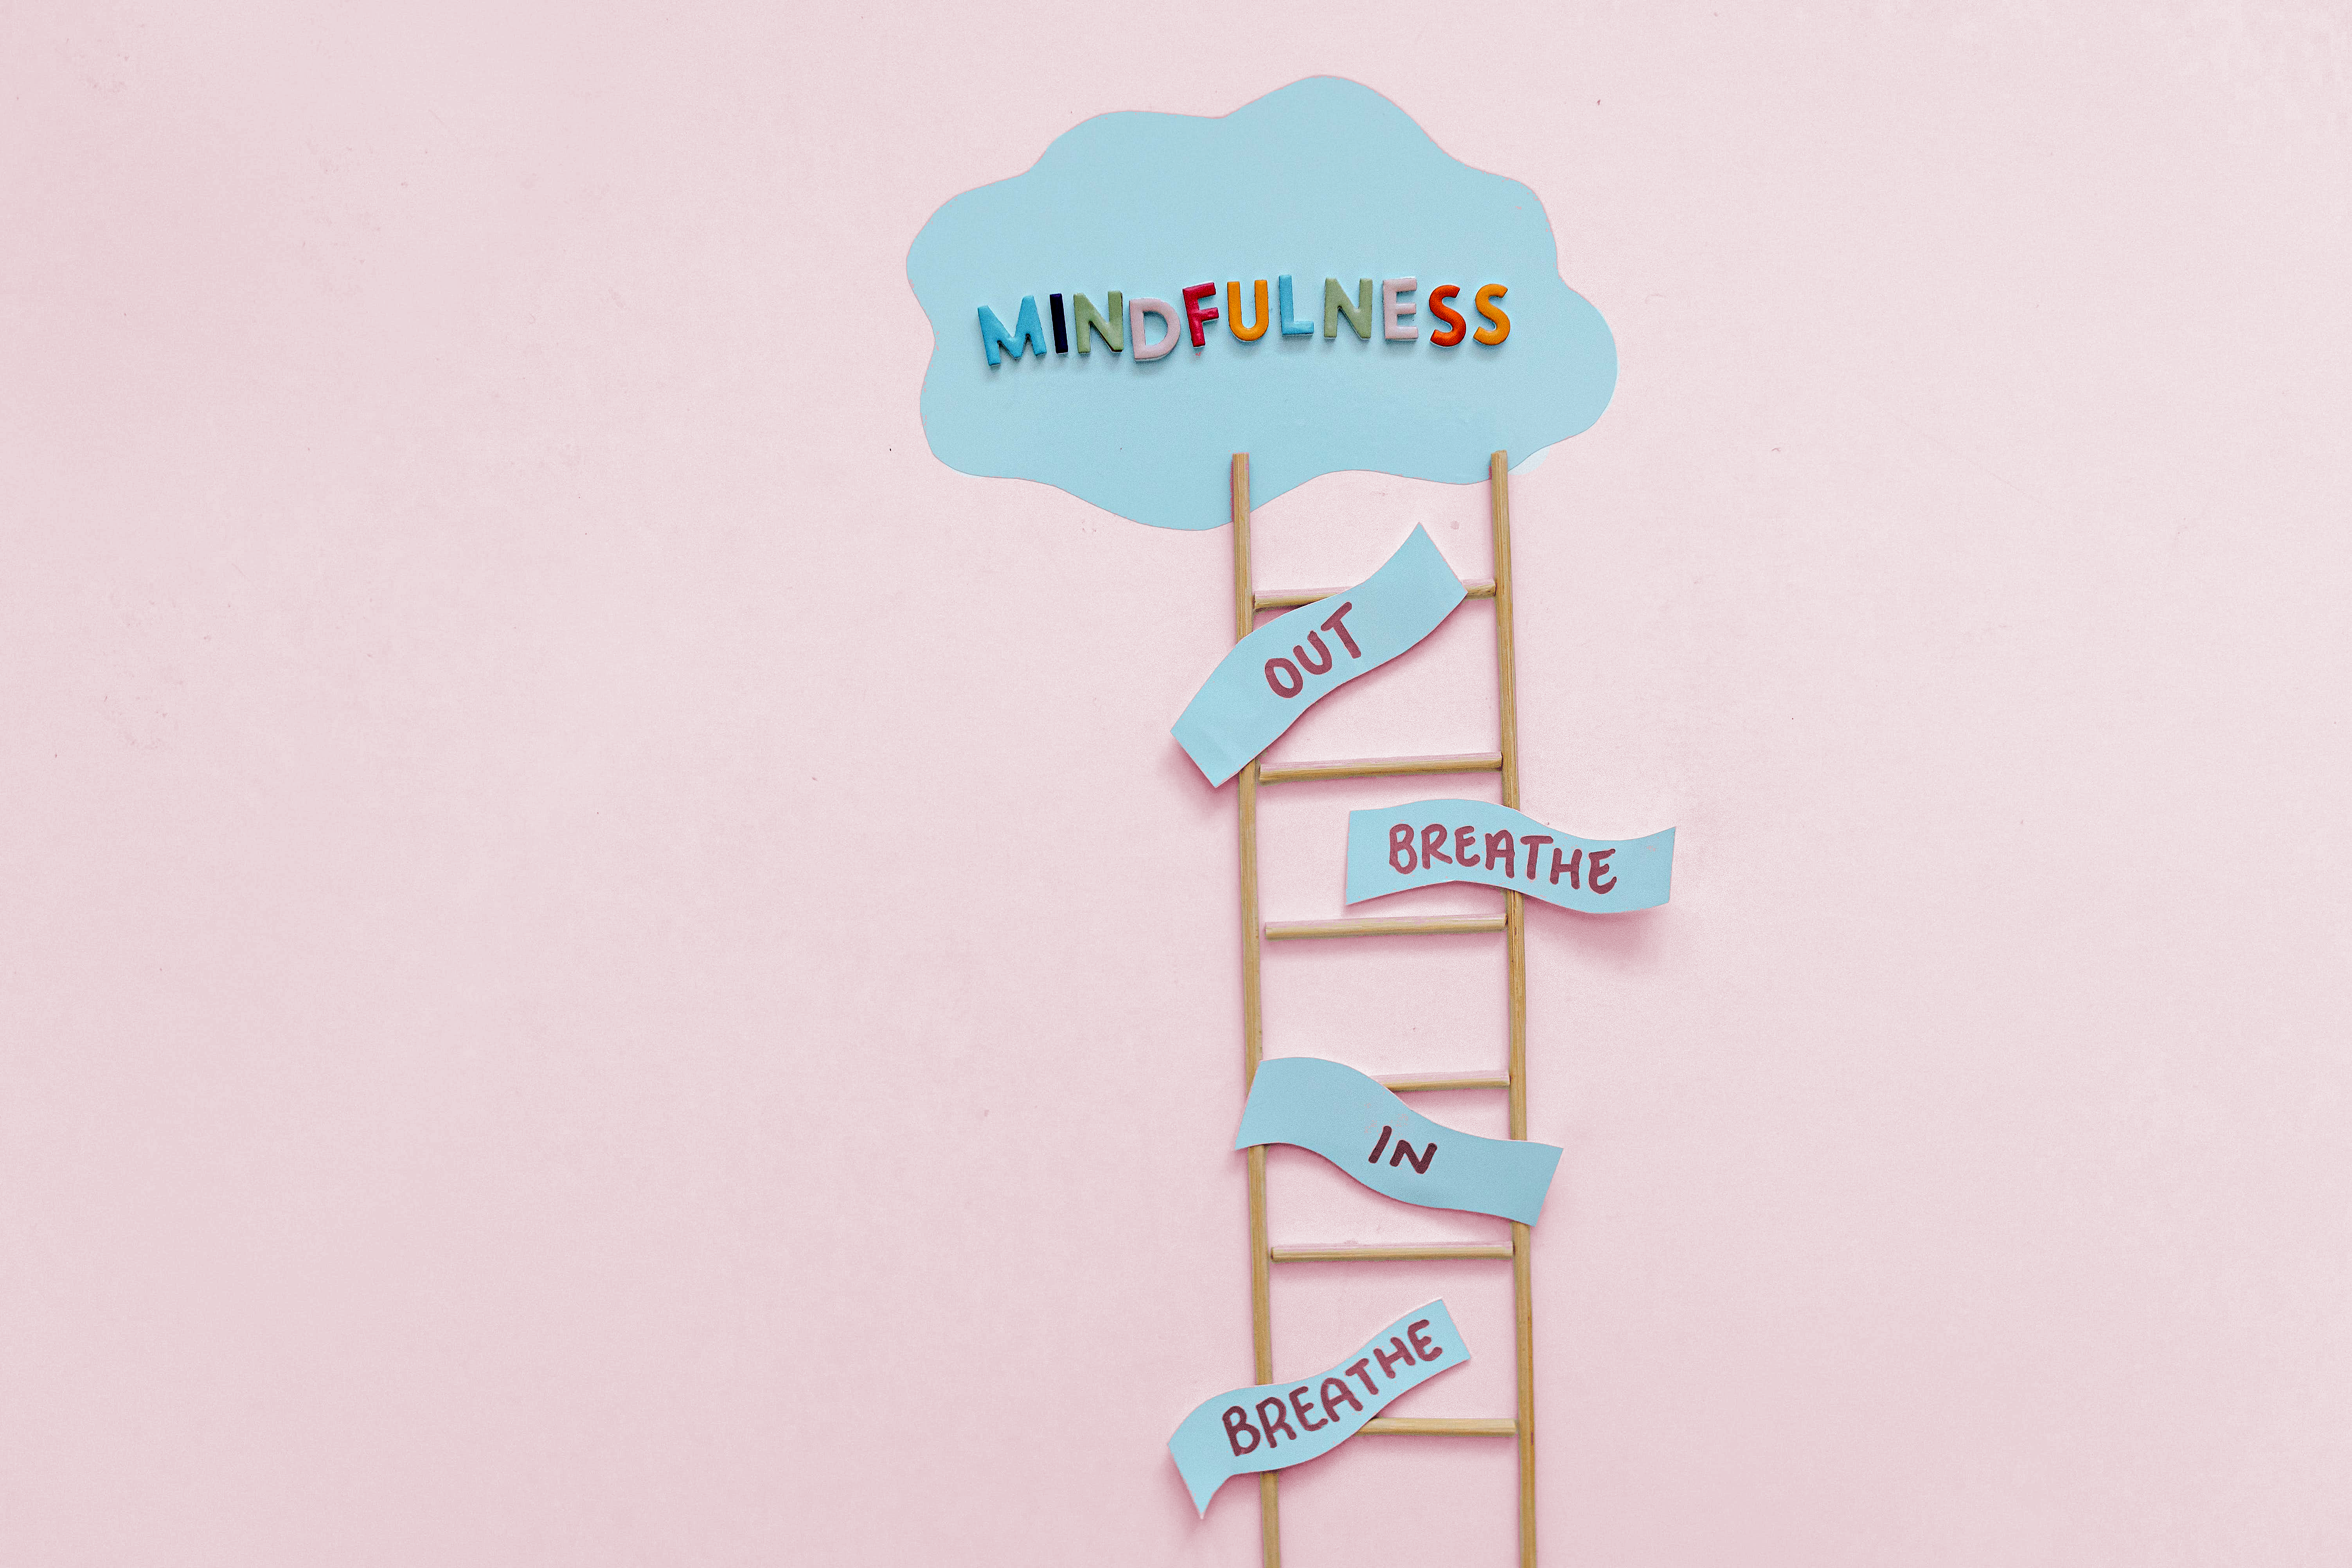 mindfulness breathe